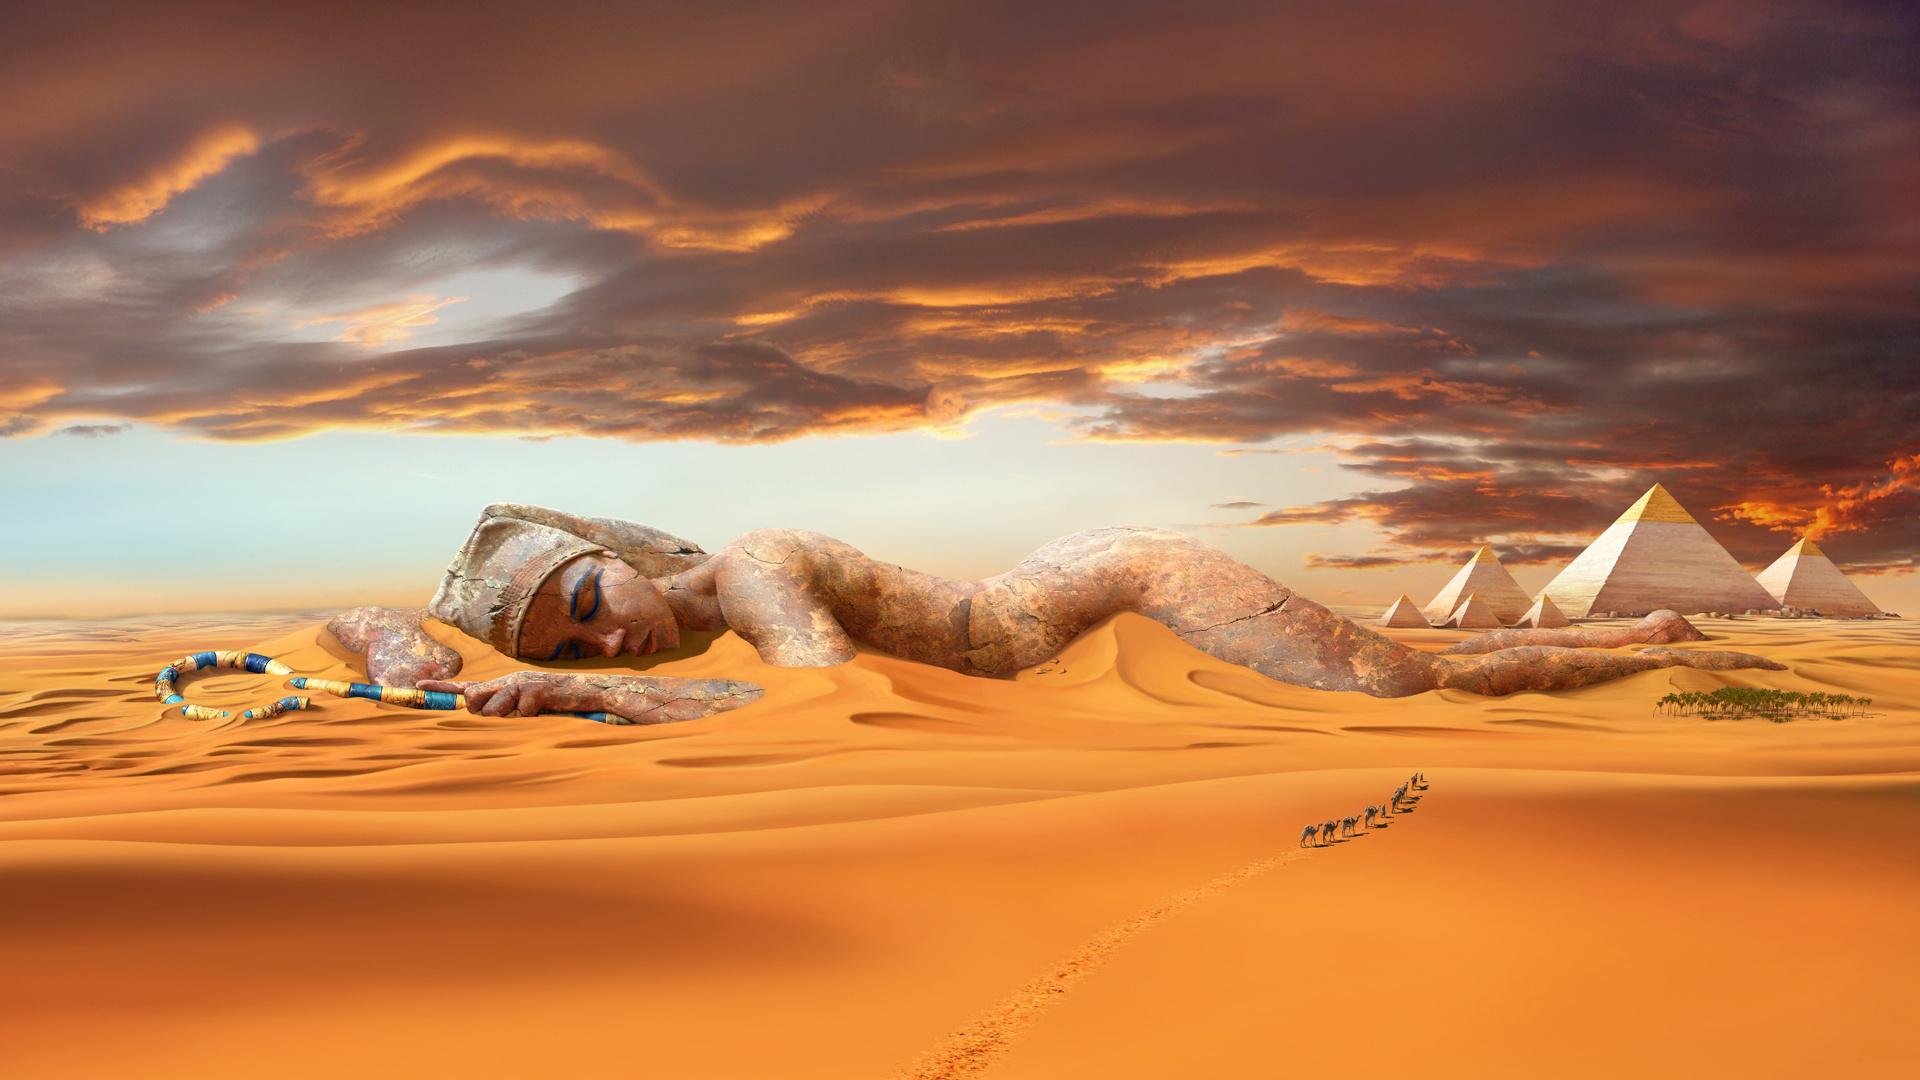 fond d'écran hd fond d'écran hd,désert,le sable,erg,ciel,sahara